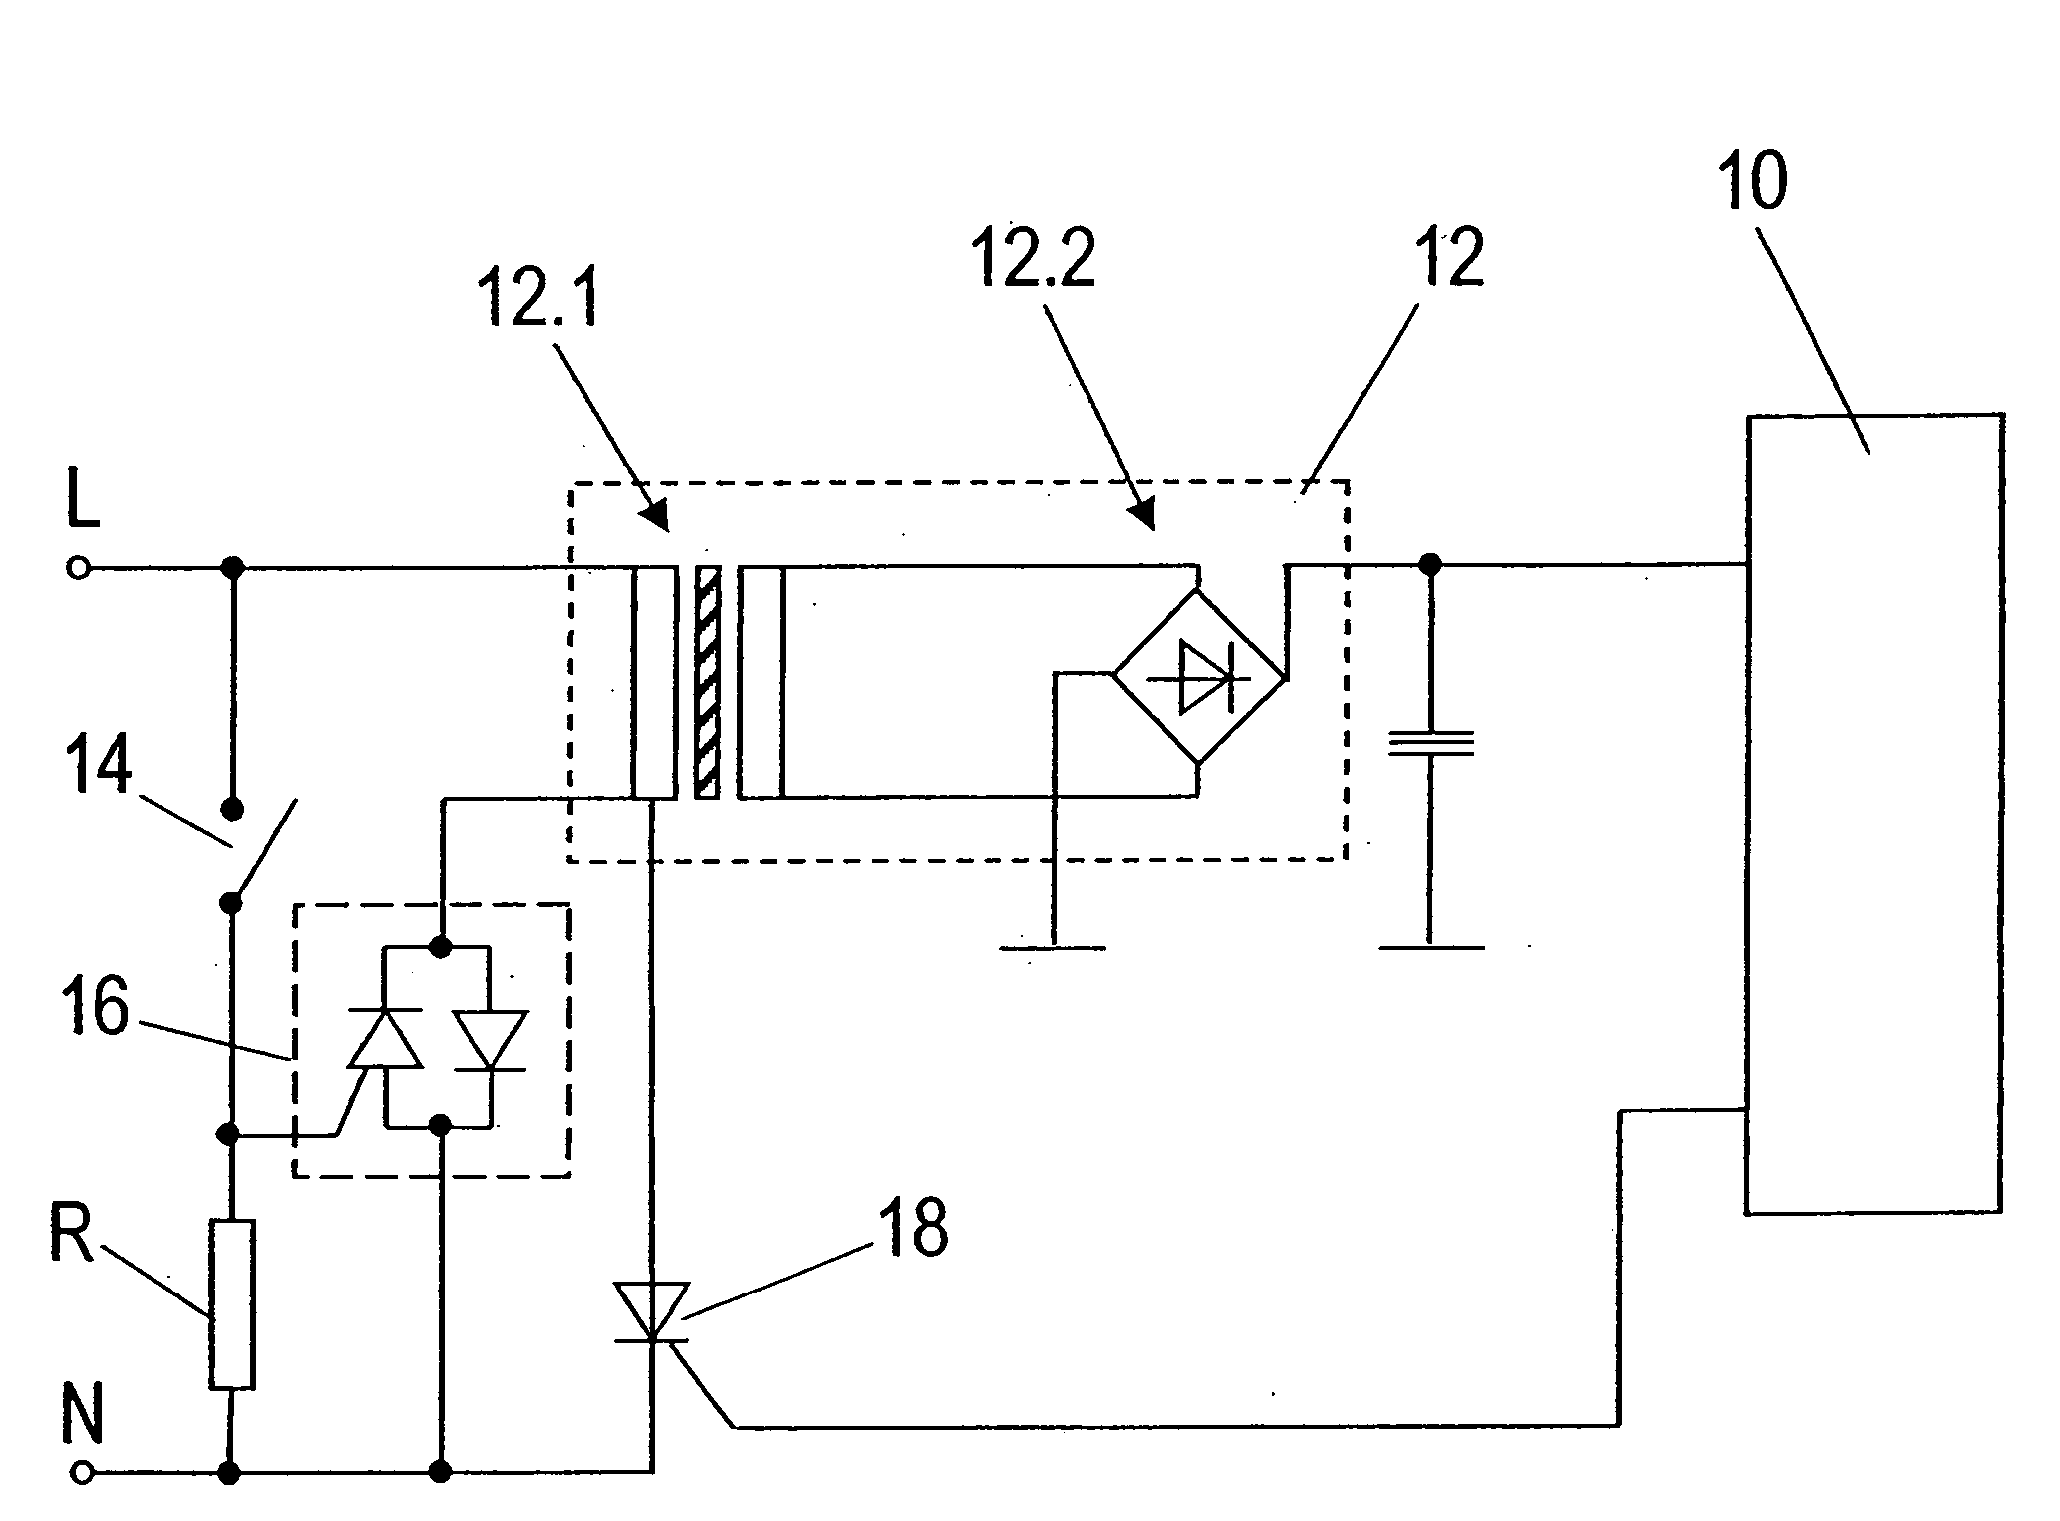 Circuit arrangement for an electric appliance